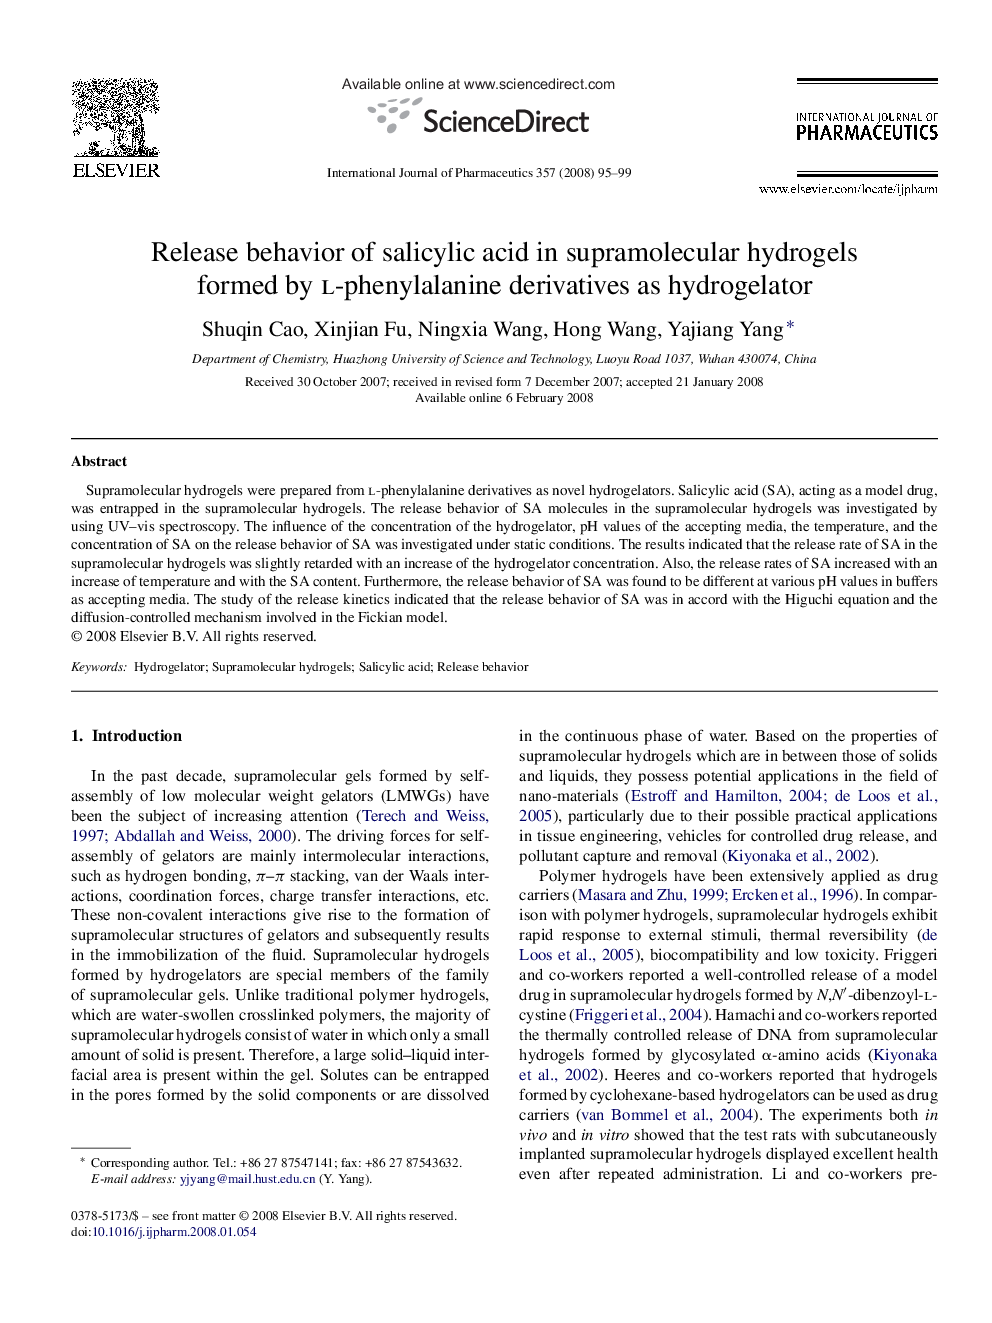 Release behavior of salicylic acid in supramolecular hydrogels formed by l-phenylalanine derivatives as hydrogelator